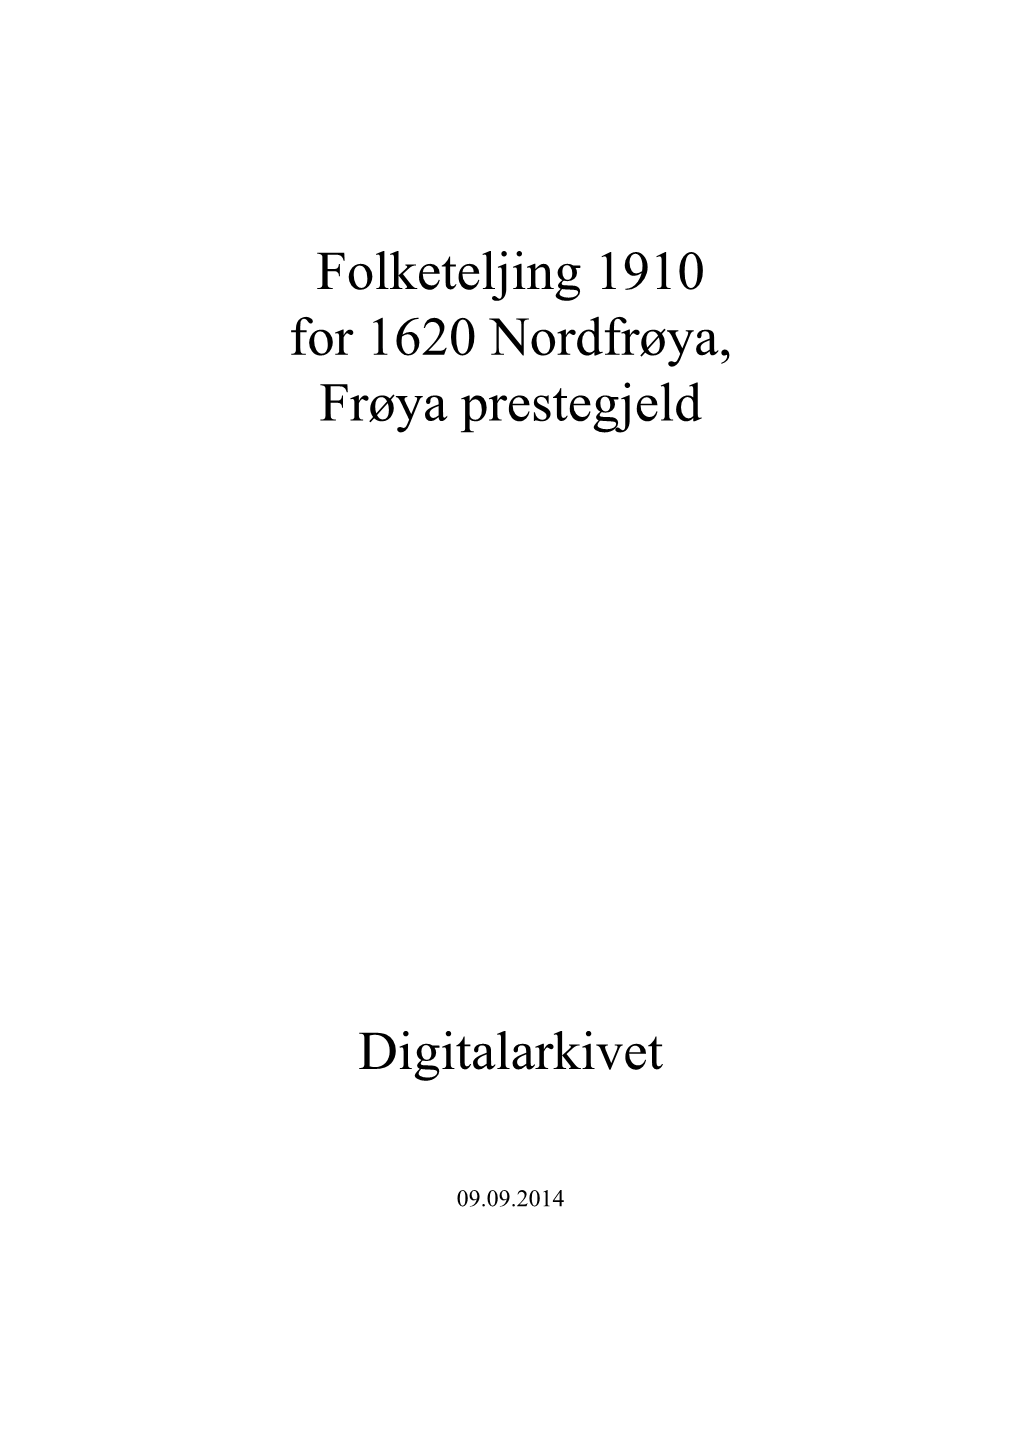 Folketeljing 1910 for 1620 Nordfrøya, Frøya Prestegjeld Digitalarkivet